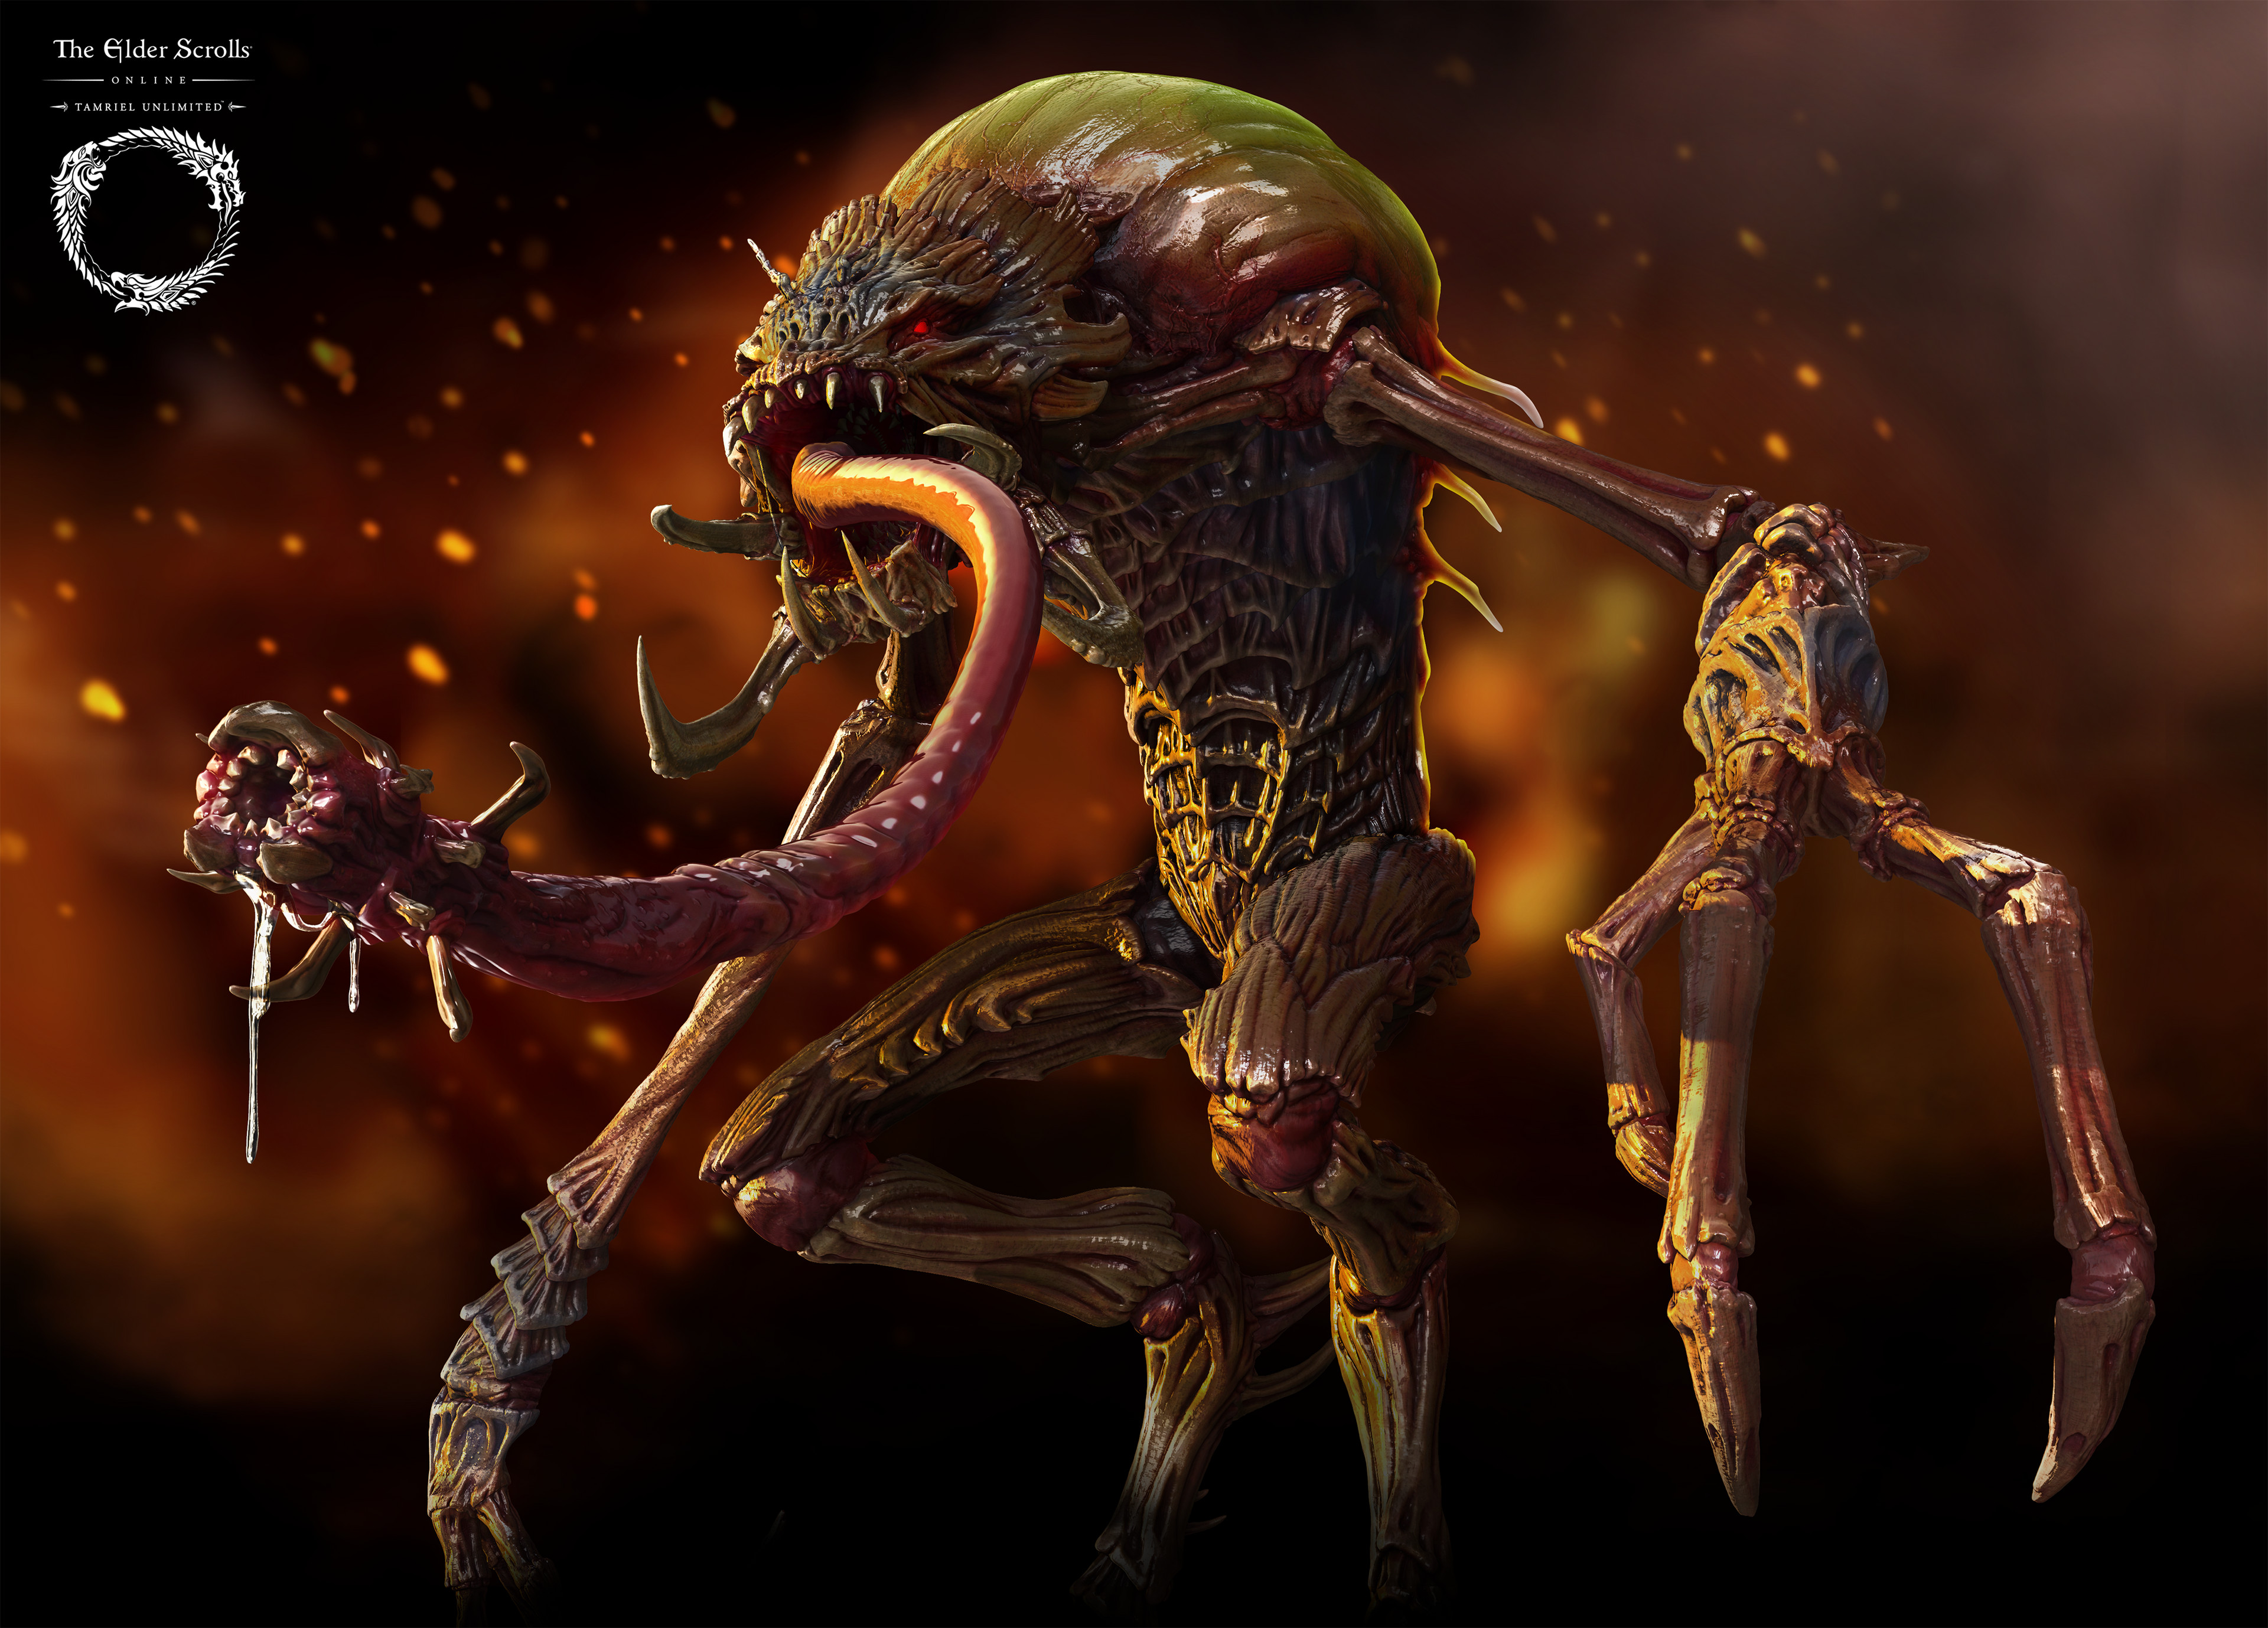 Collectible Creatures Fan Art Contest - The Elder Scrolls Online